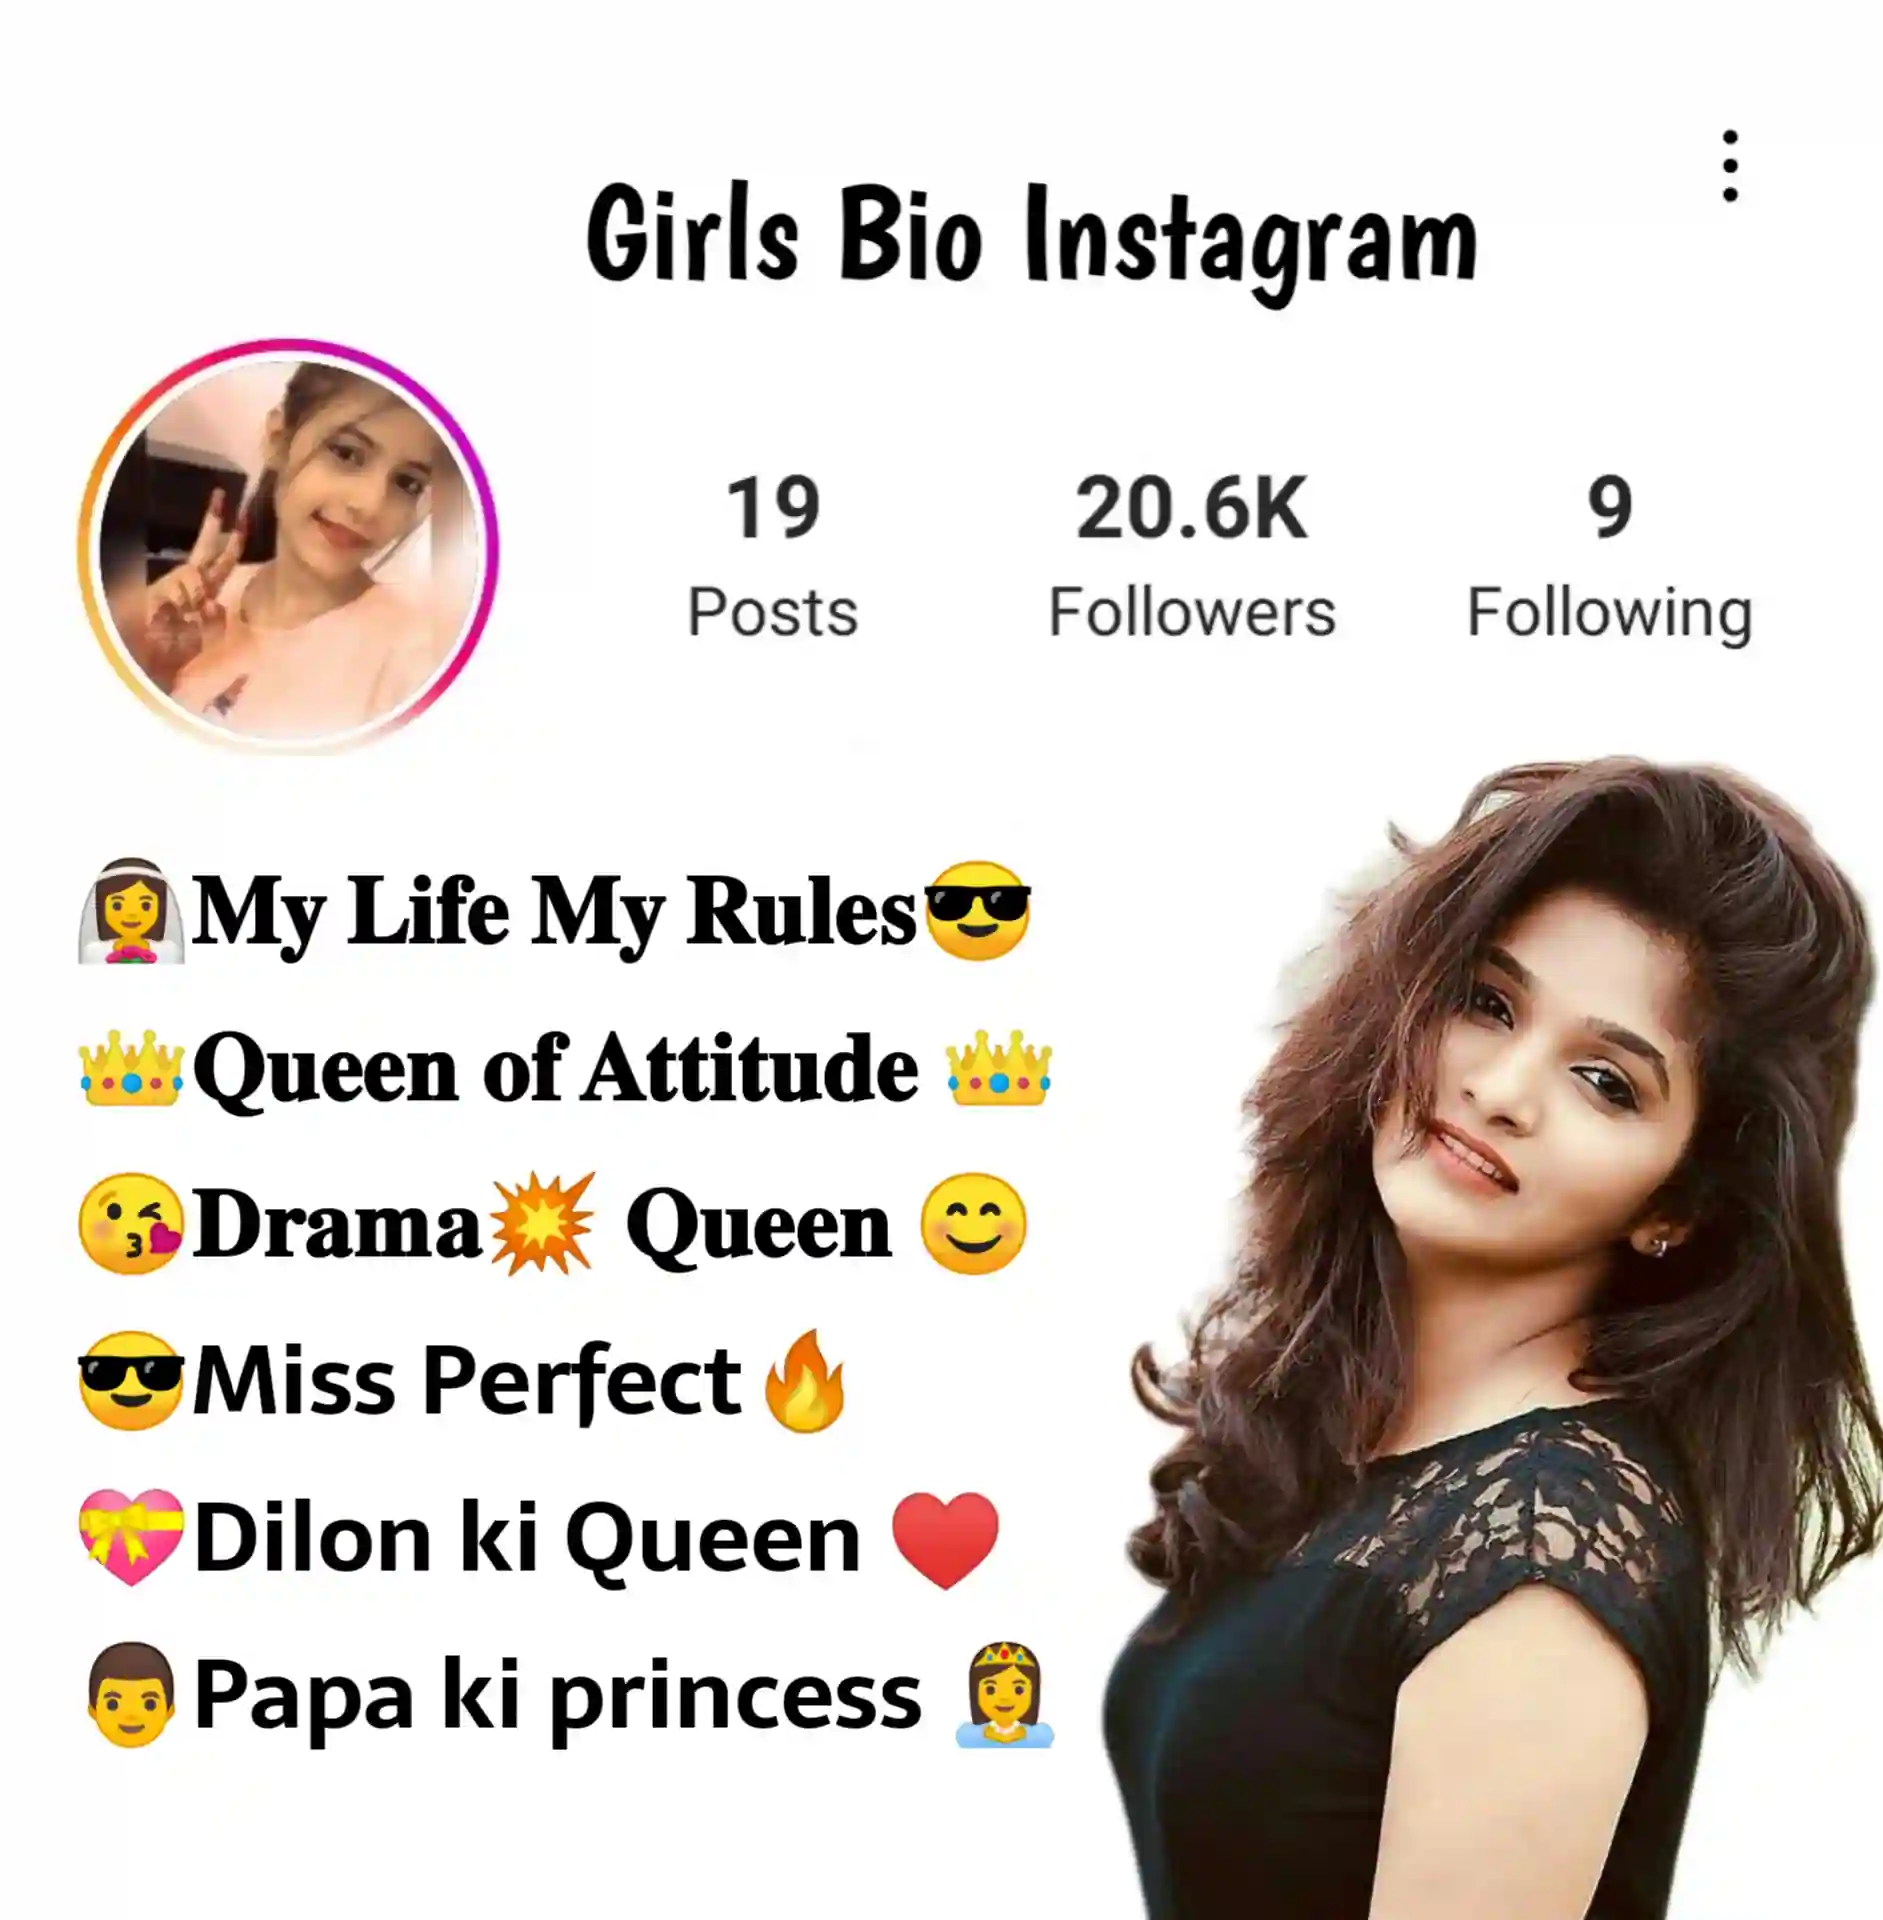 Instagram Bio for Girls Attitude